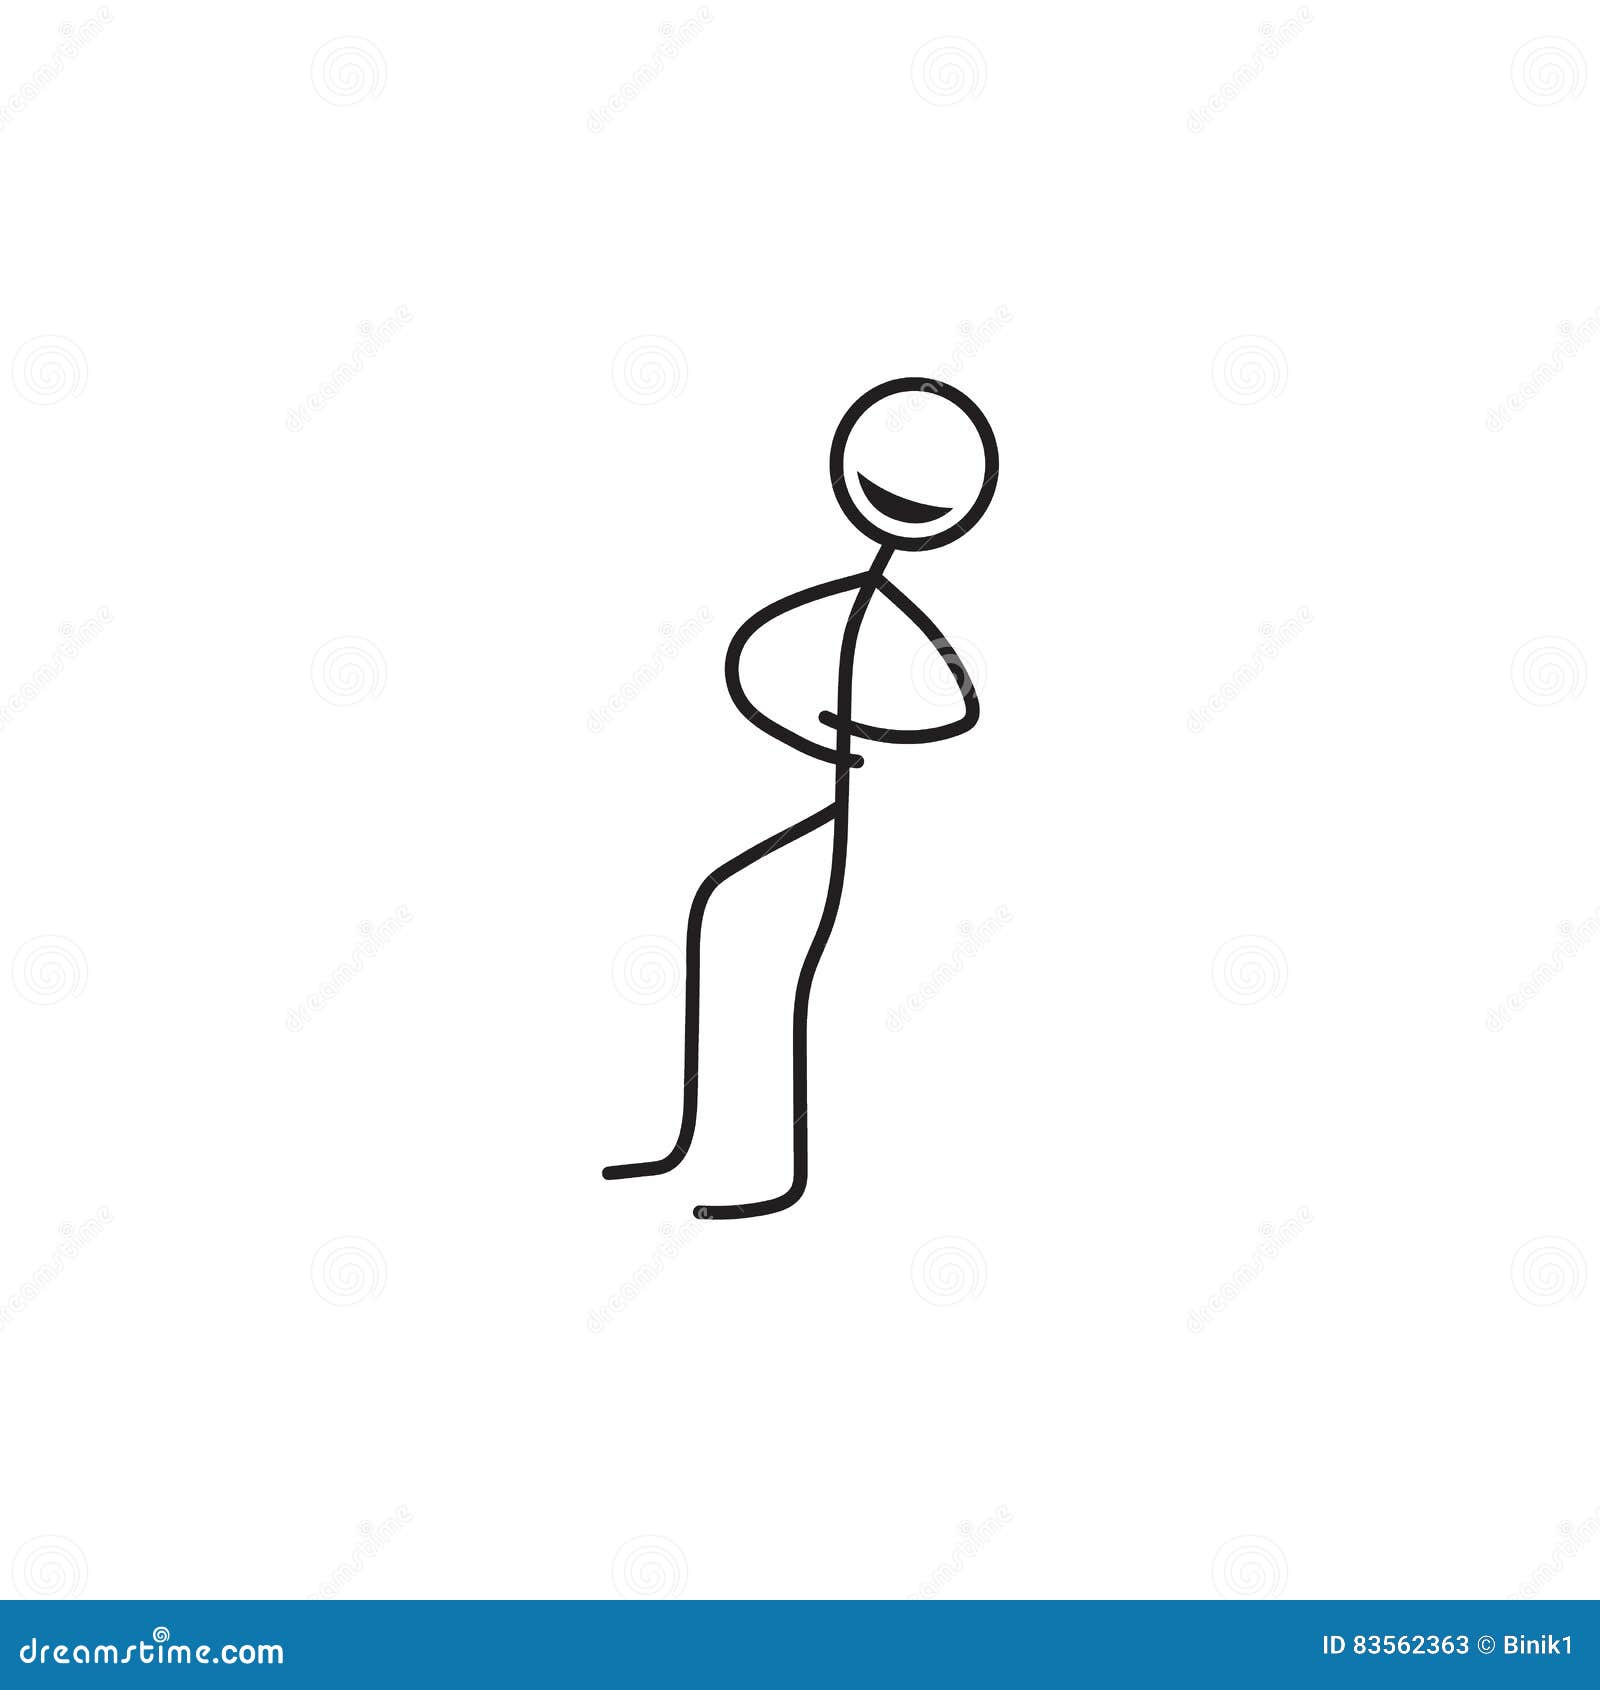 Happy man stick figure stock vector. Illustration of face - 83562363